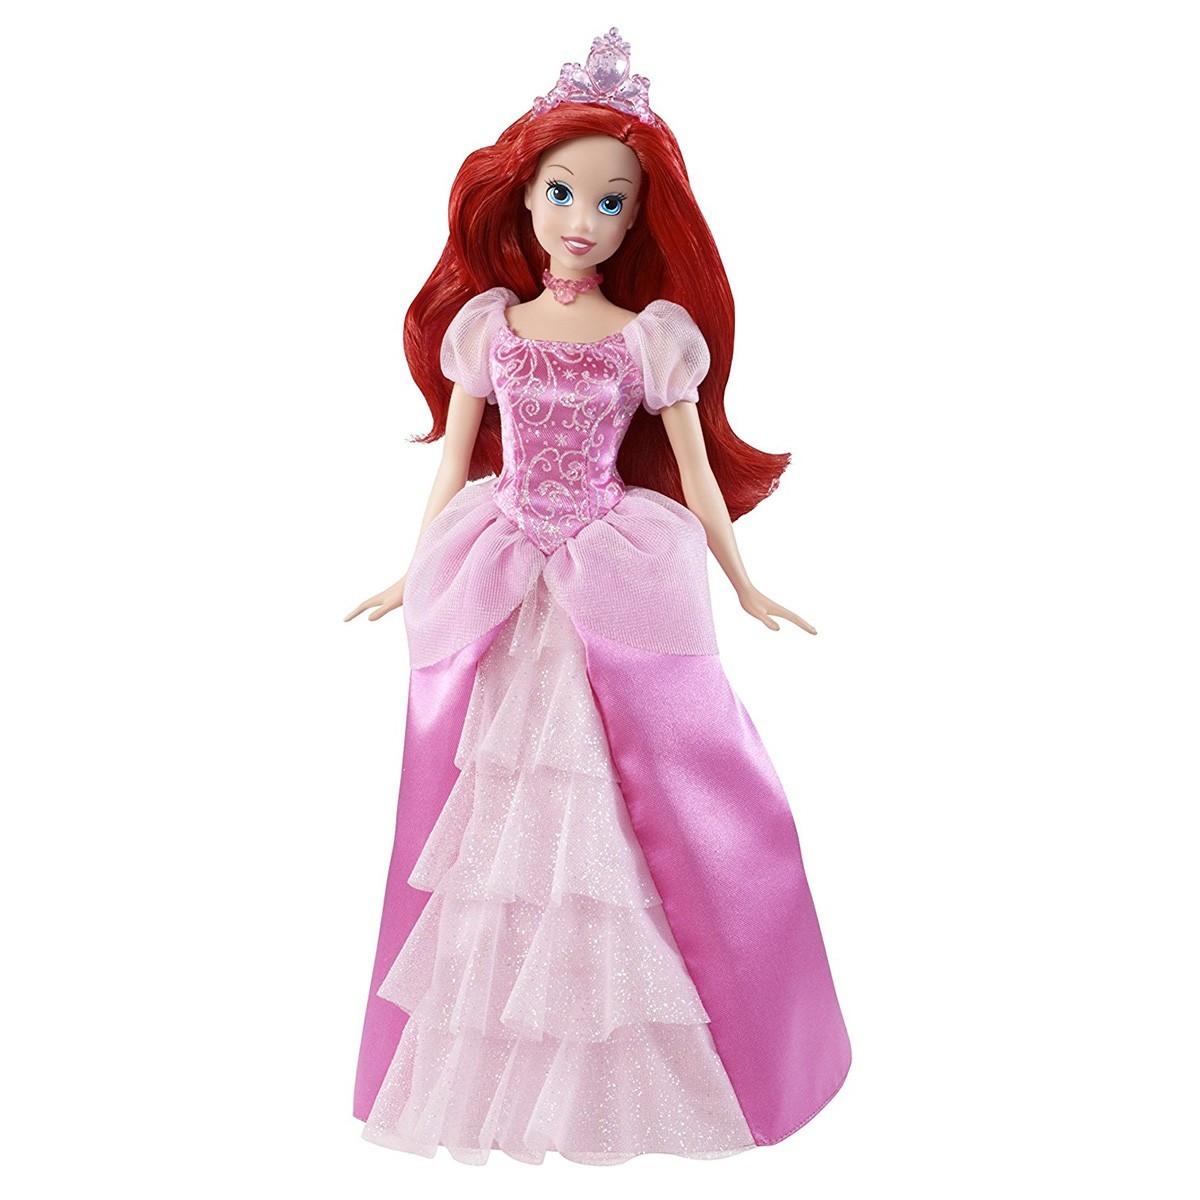 Disney Princess -  Sparkling Princess - Ariel Figure